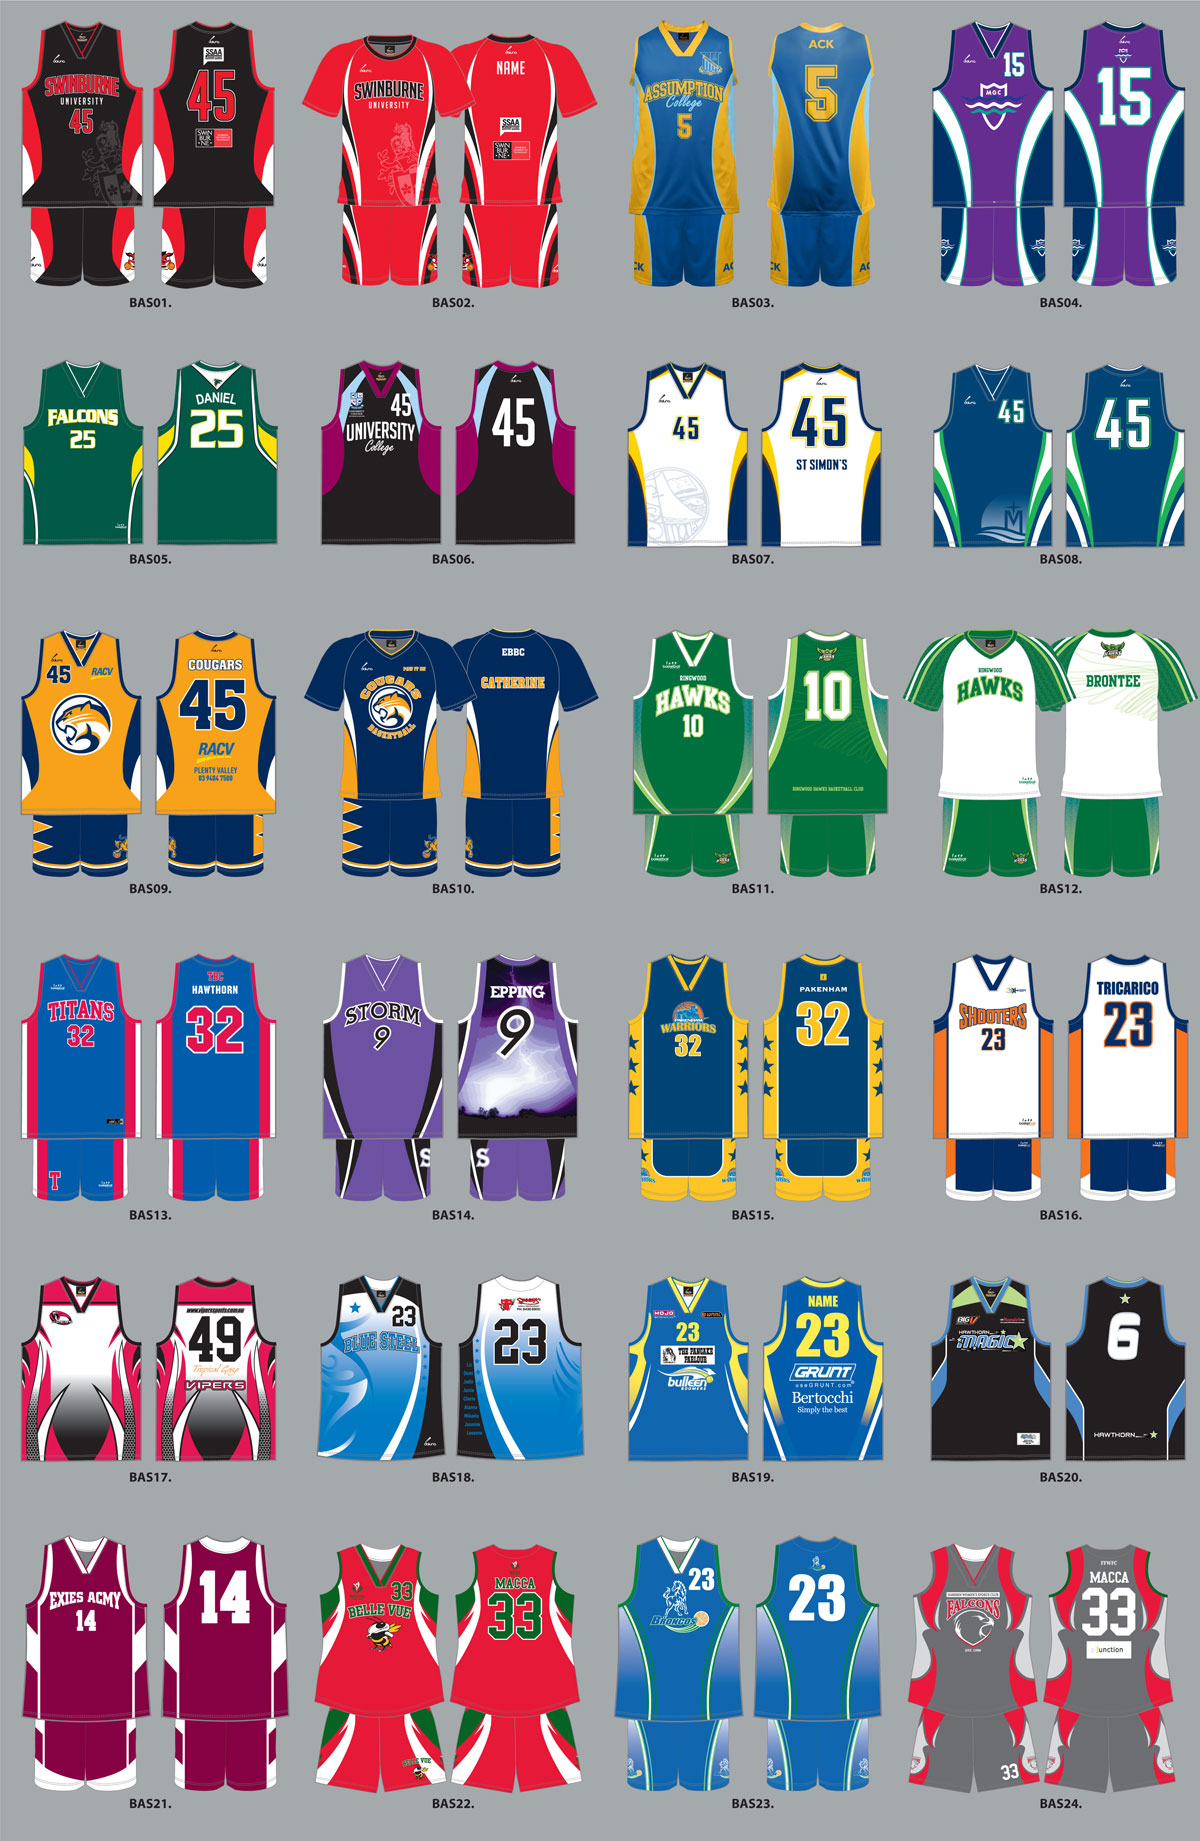 Basketball-Web-Gallery.jpg